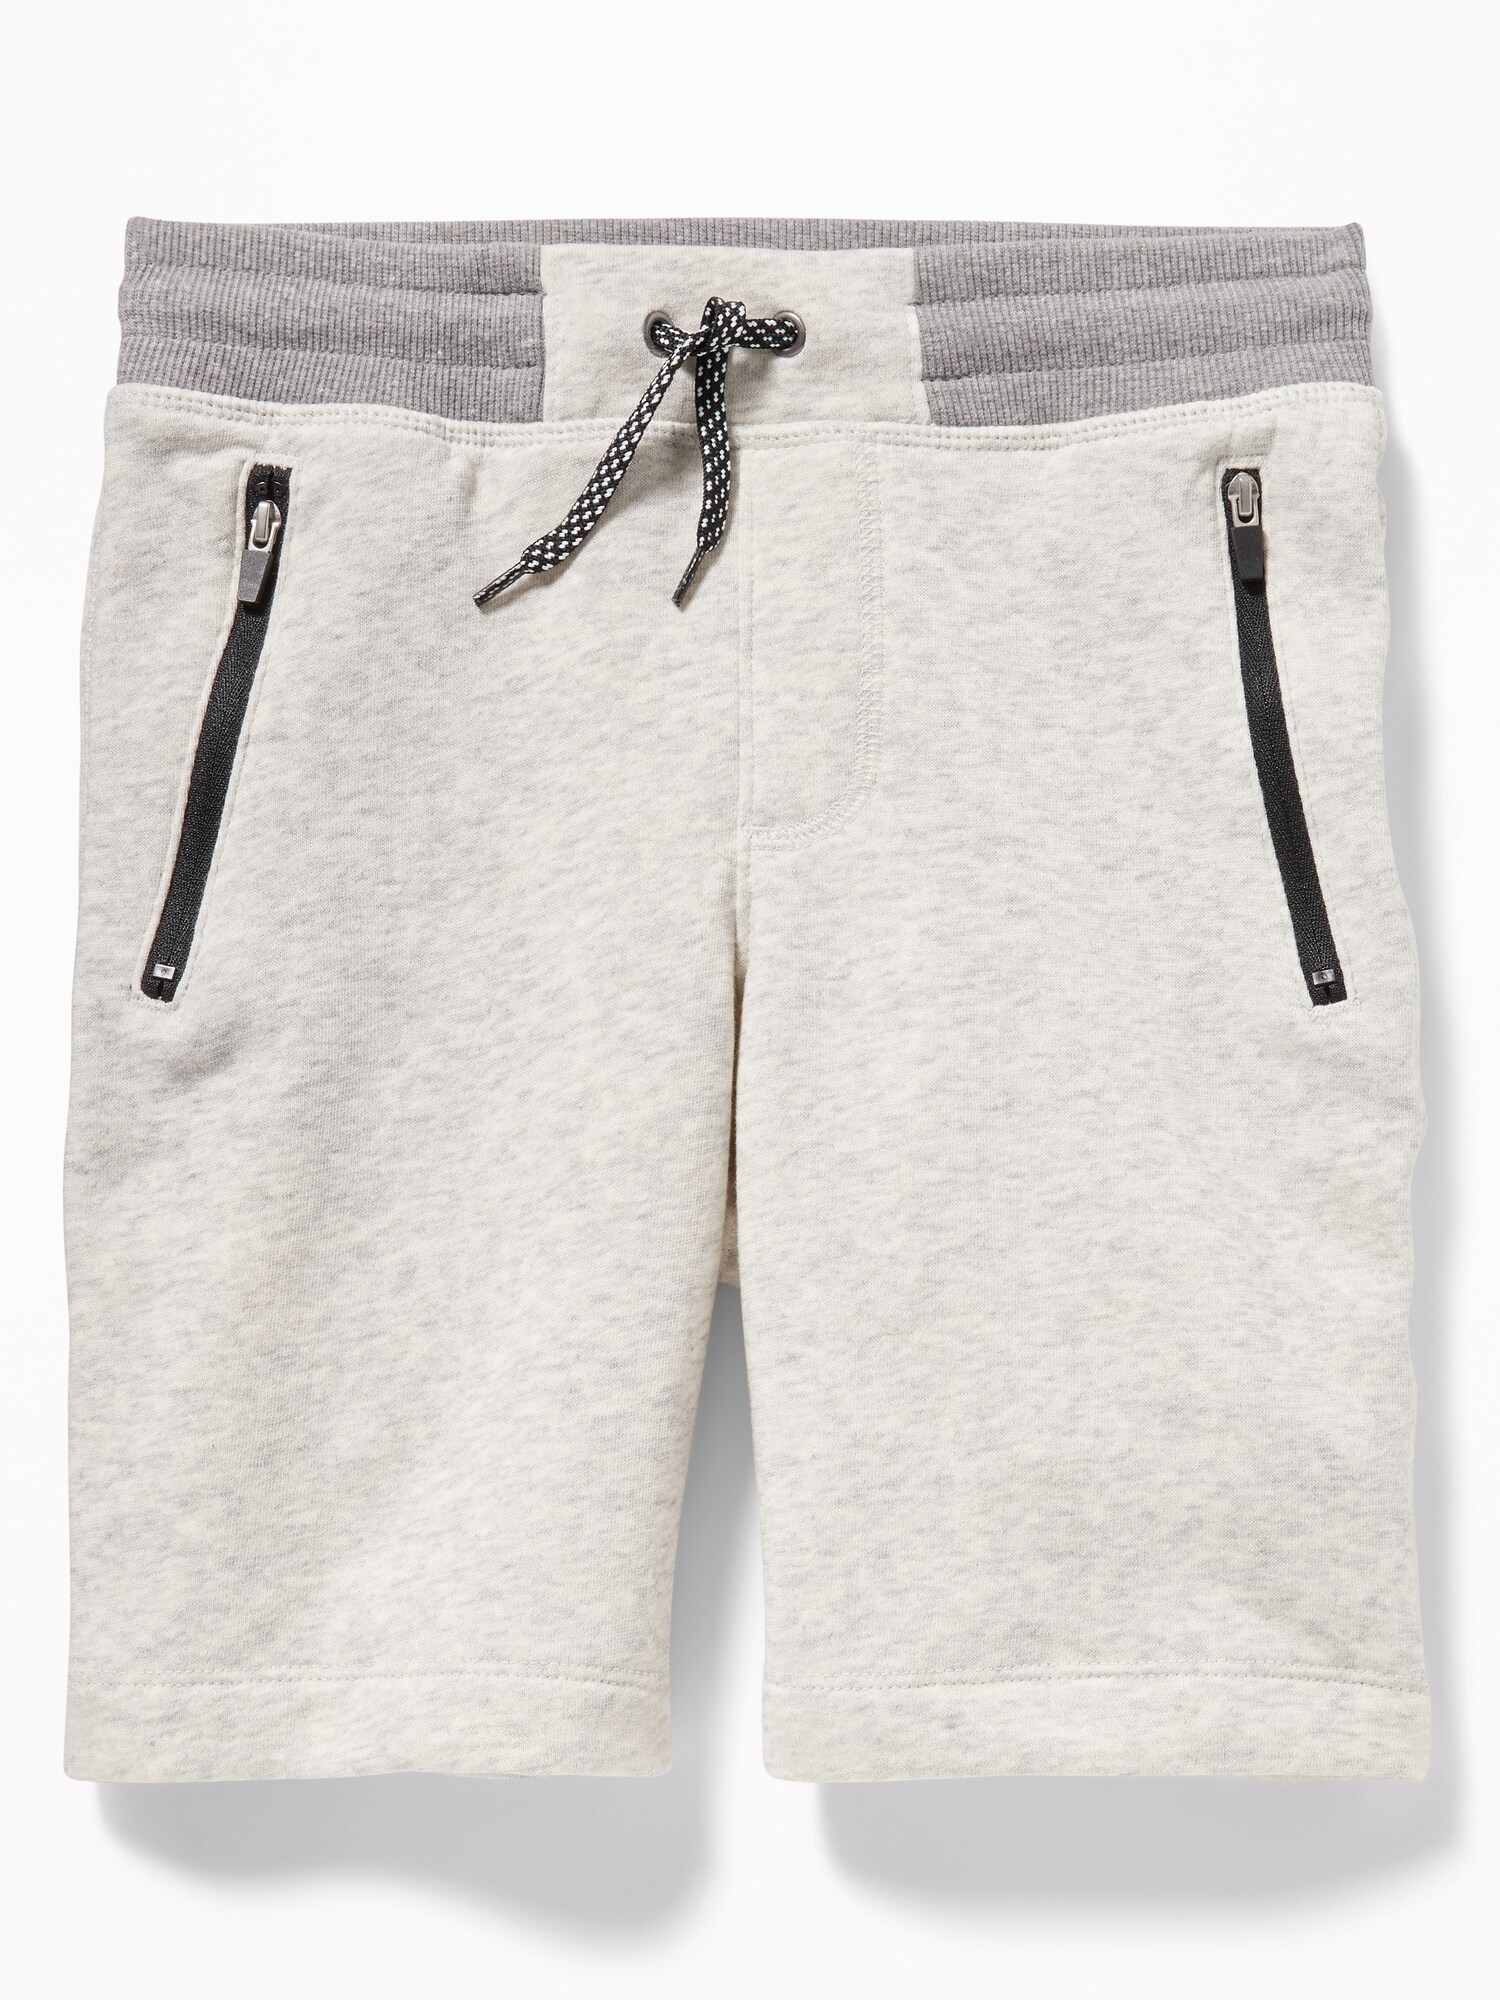 jogger shorts with zipper pockets